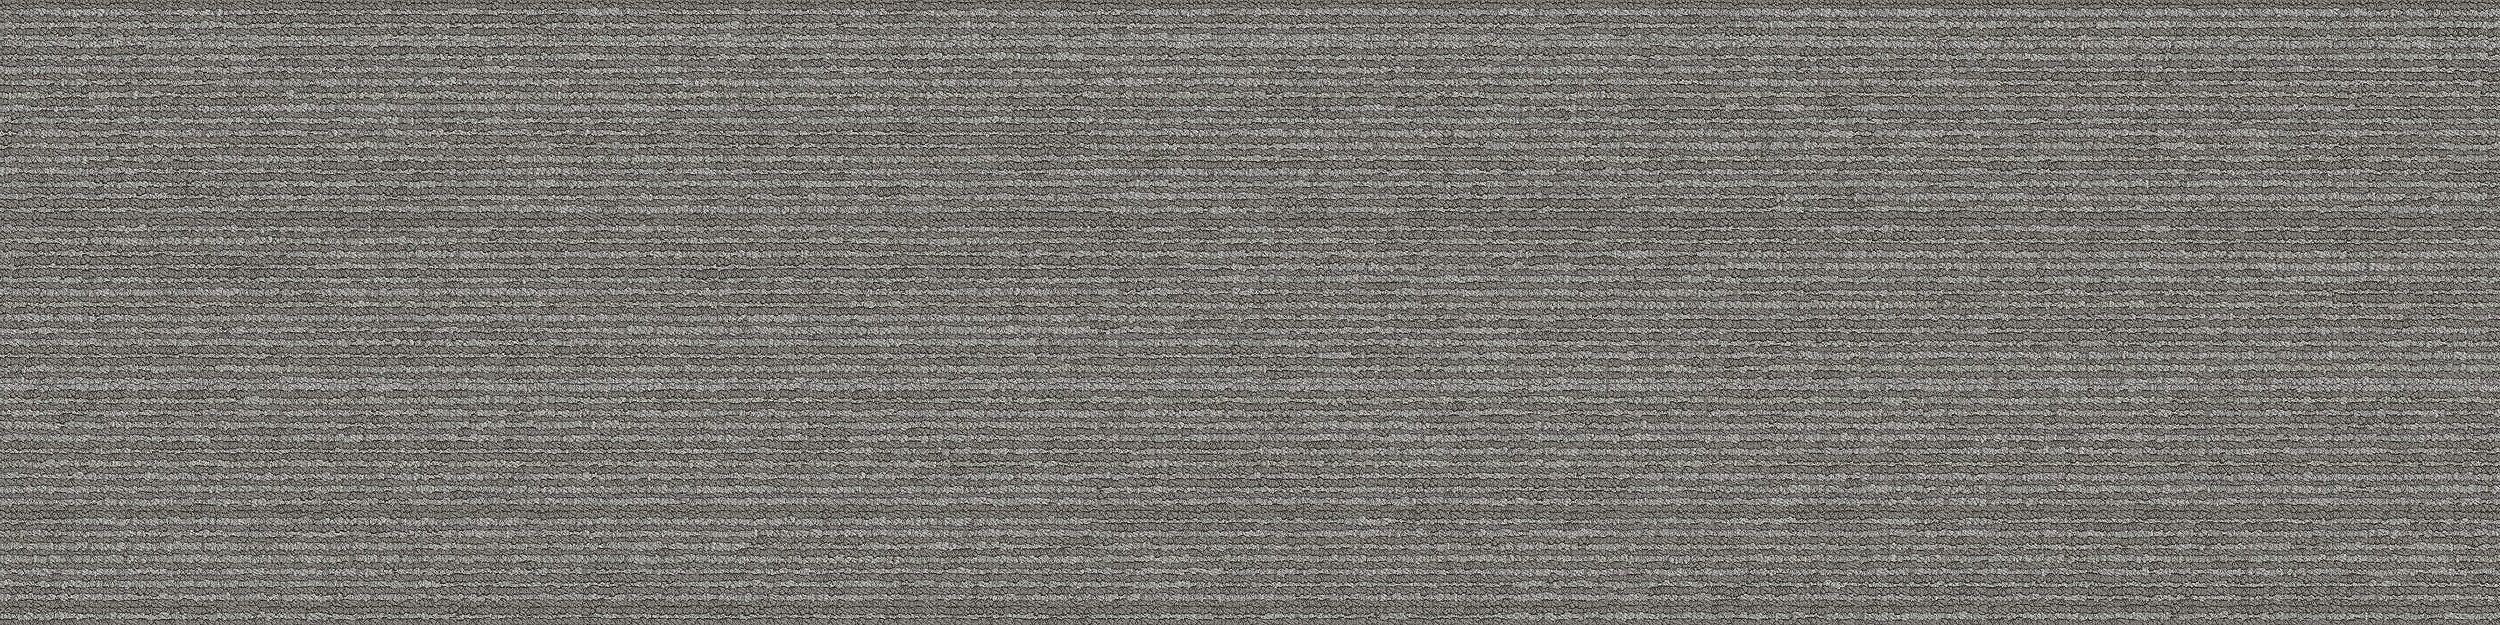 CE171 Carpet Tile In Samurai image number 4